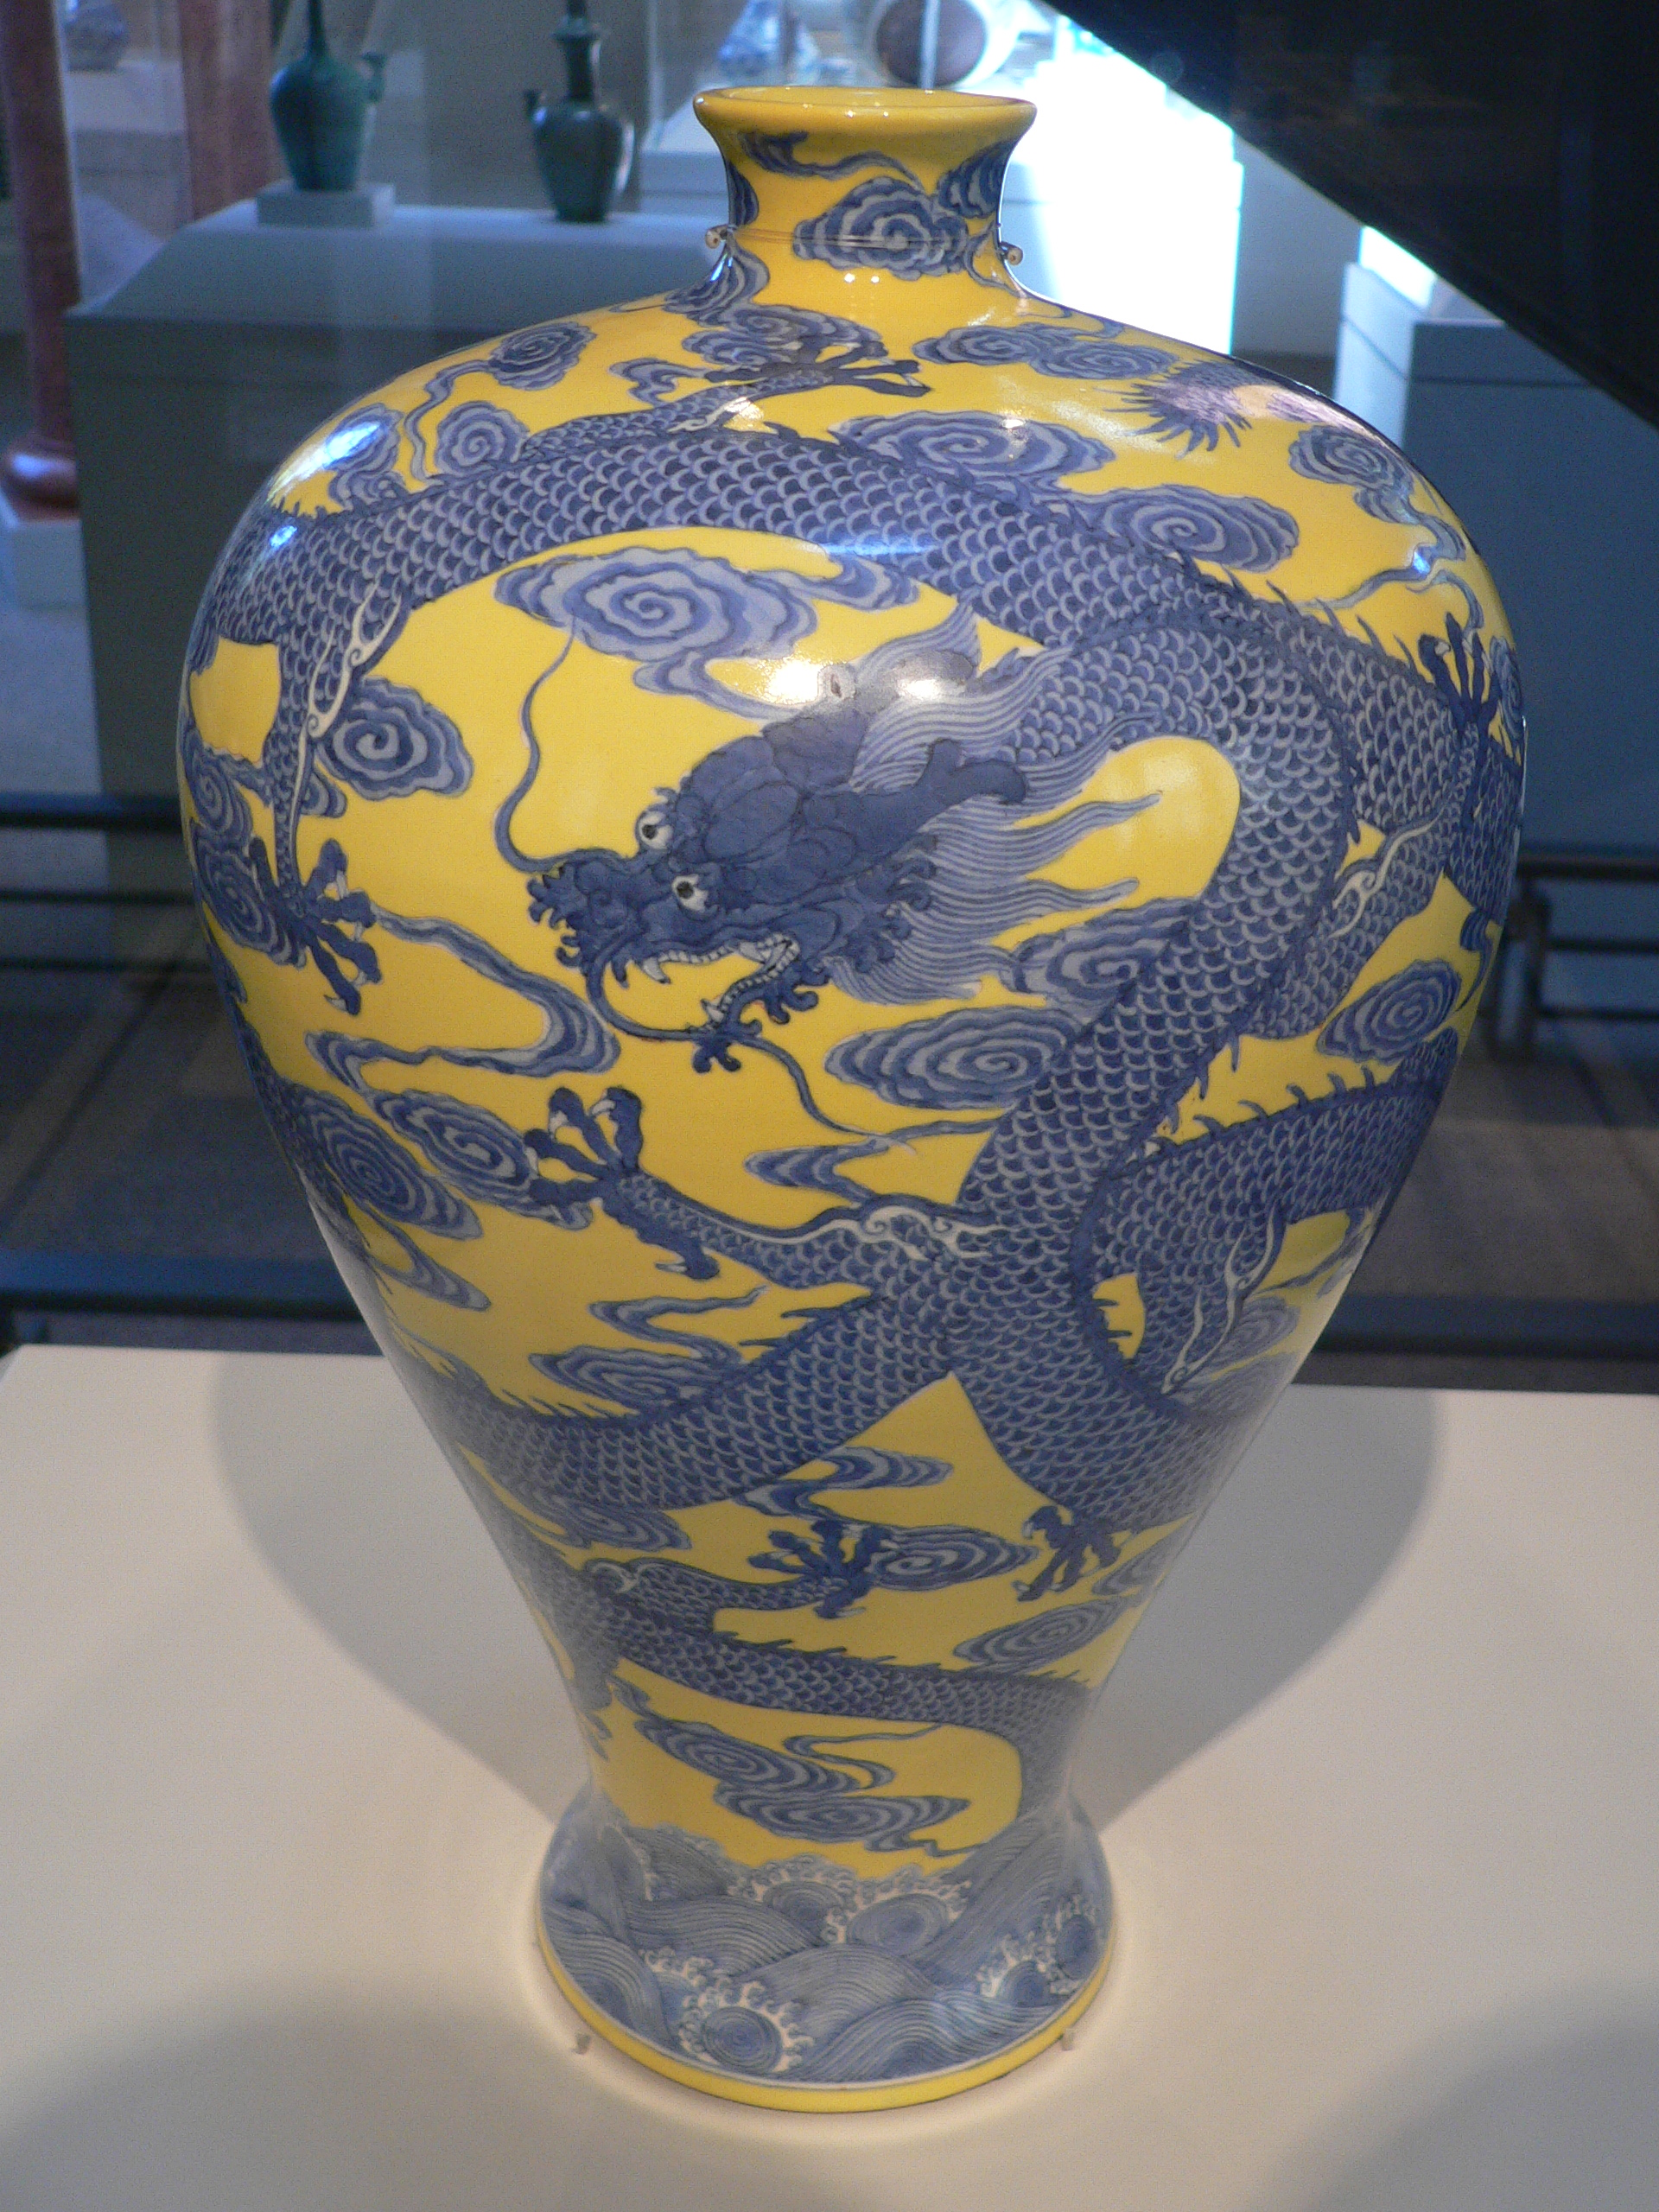 Limbah pecahan keramik yang tersedia di lingkungan dapat dimanfaatkan dengan teknik